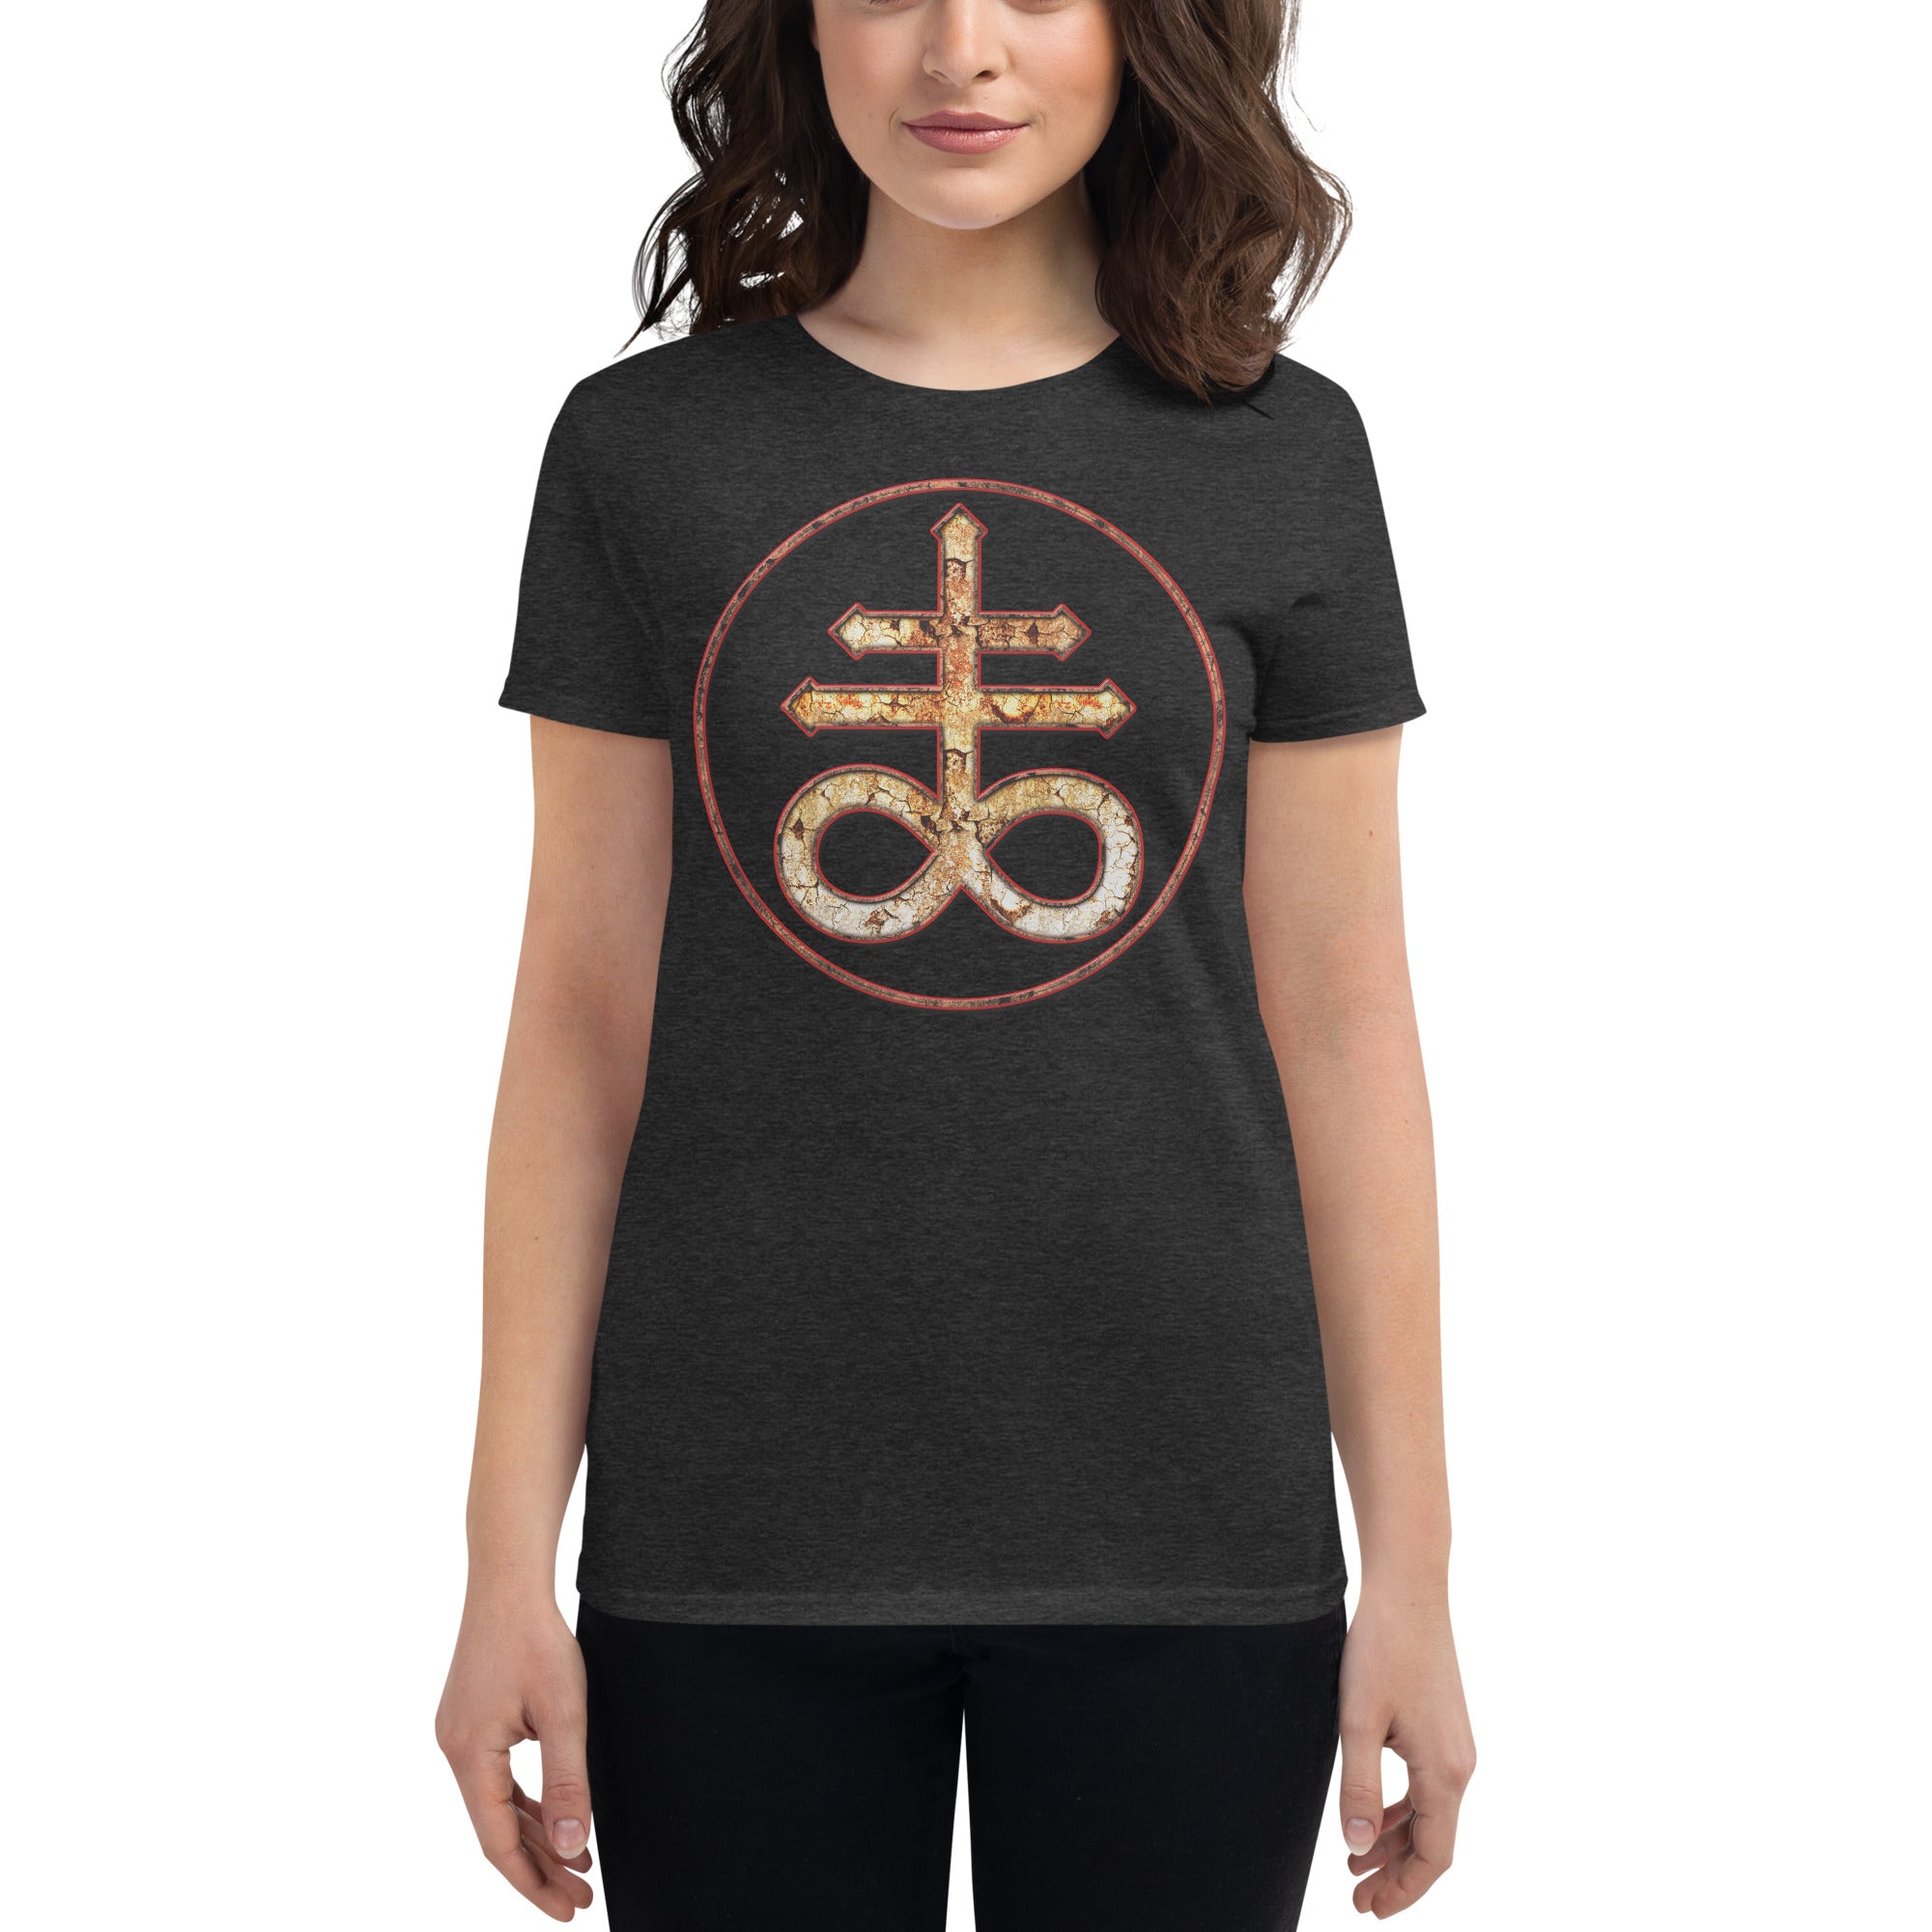 Withered Evil Satan's Cross Leviathan Symbol Women's Short Sleeve Babydoll T-shirt